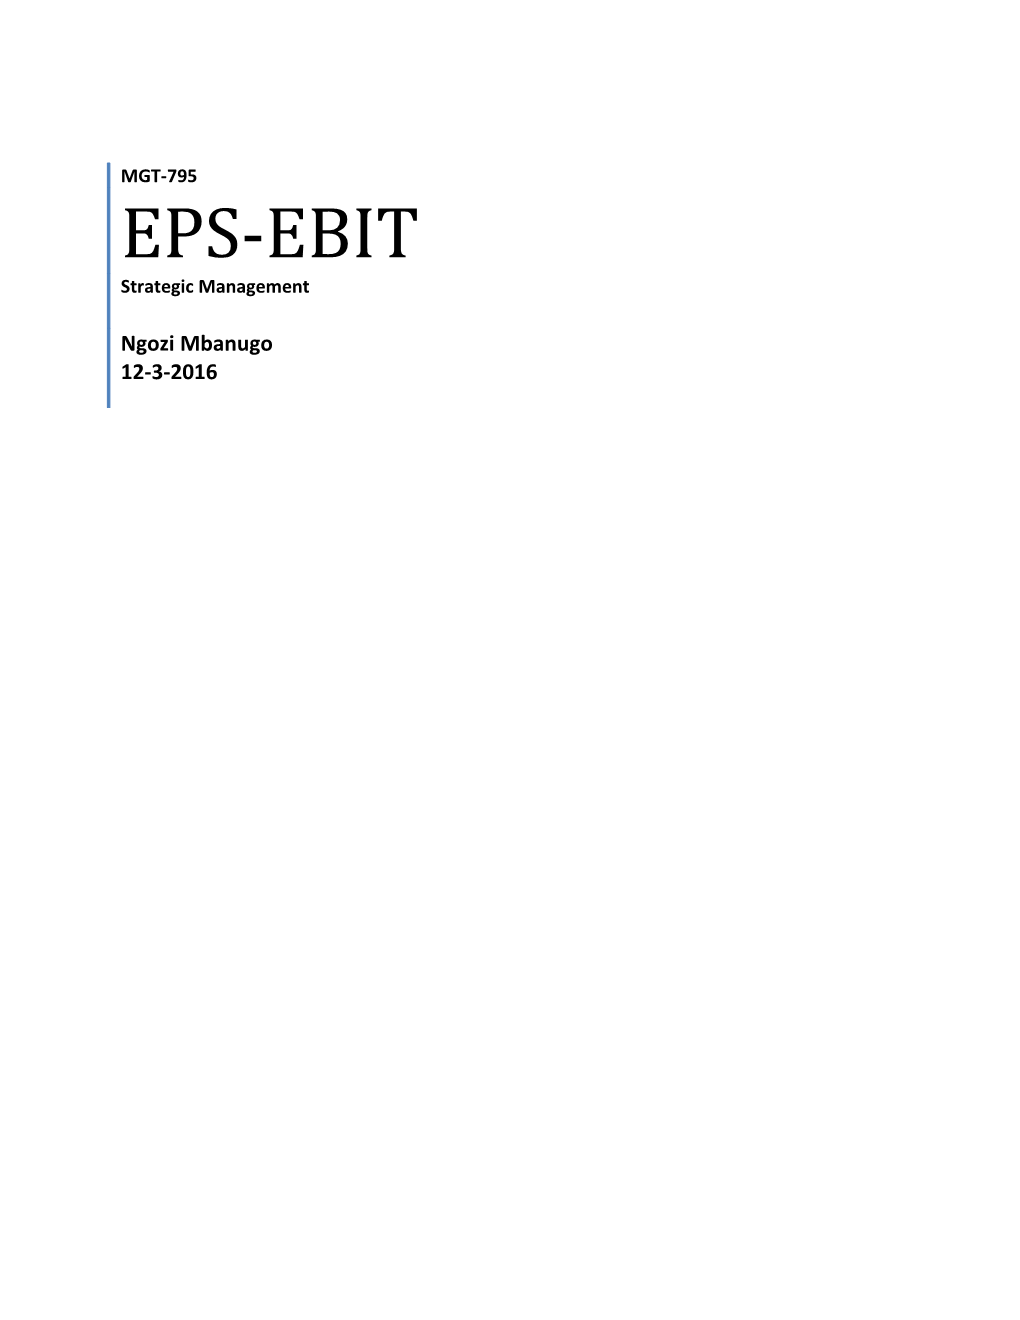 EPS EBIT Analysis of Keurig Green Mountain Inc